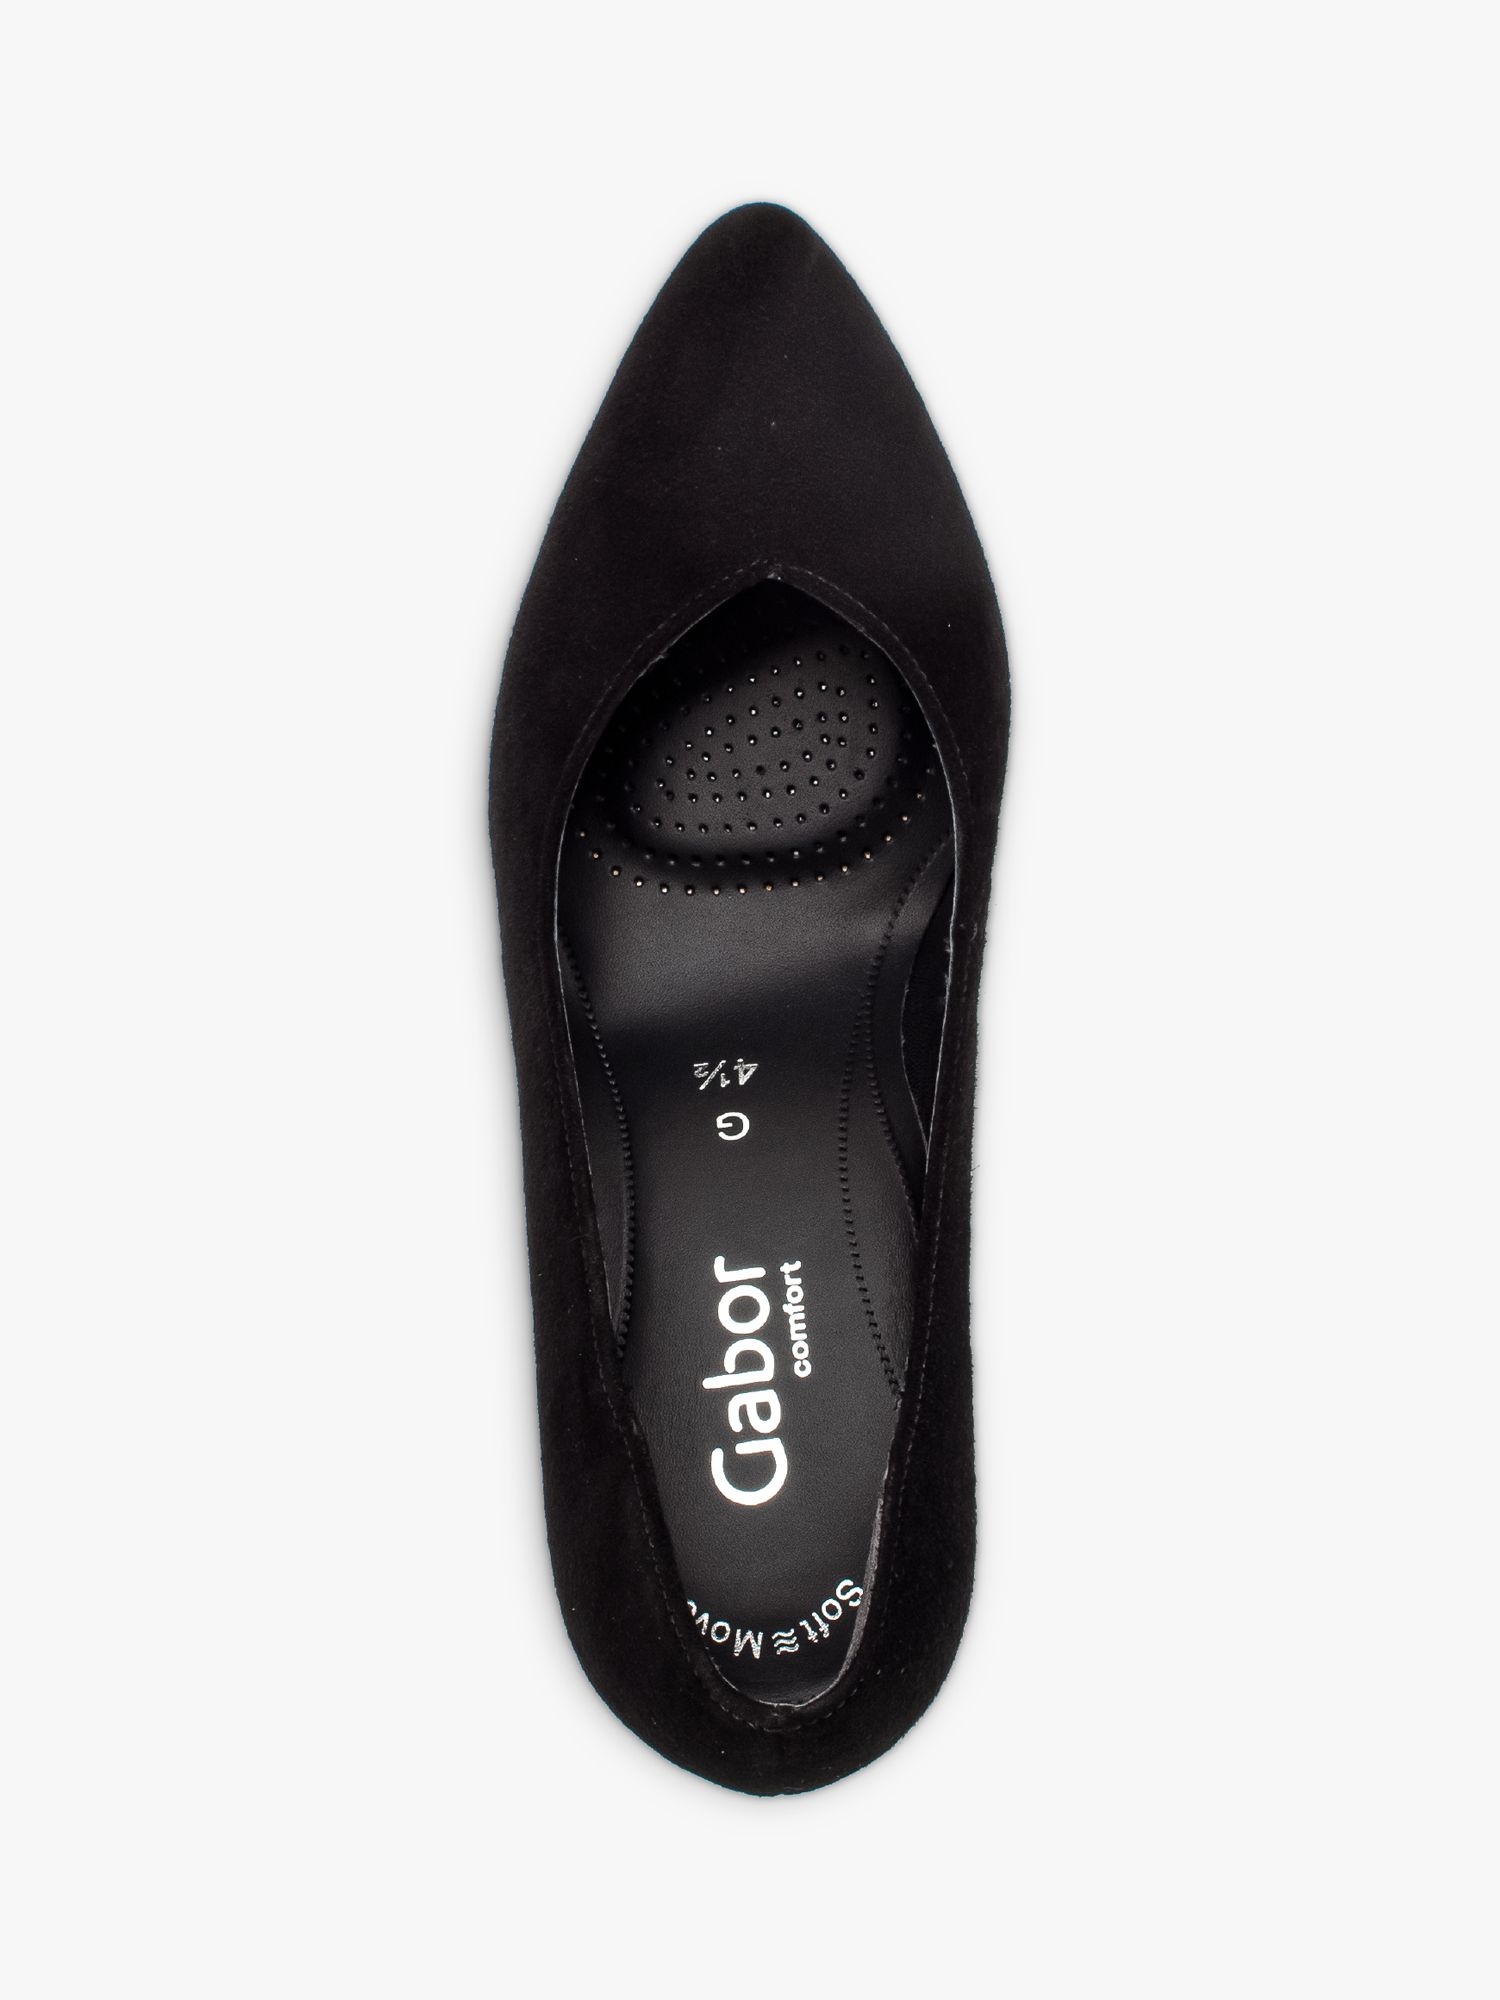 Gabor Helga Wide Fit Suede Court Shoes, Black, 6